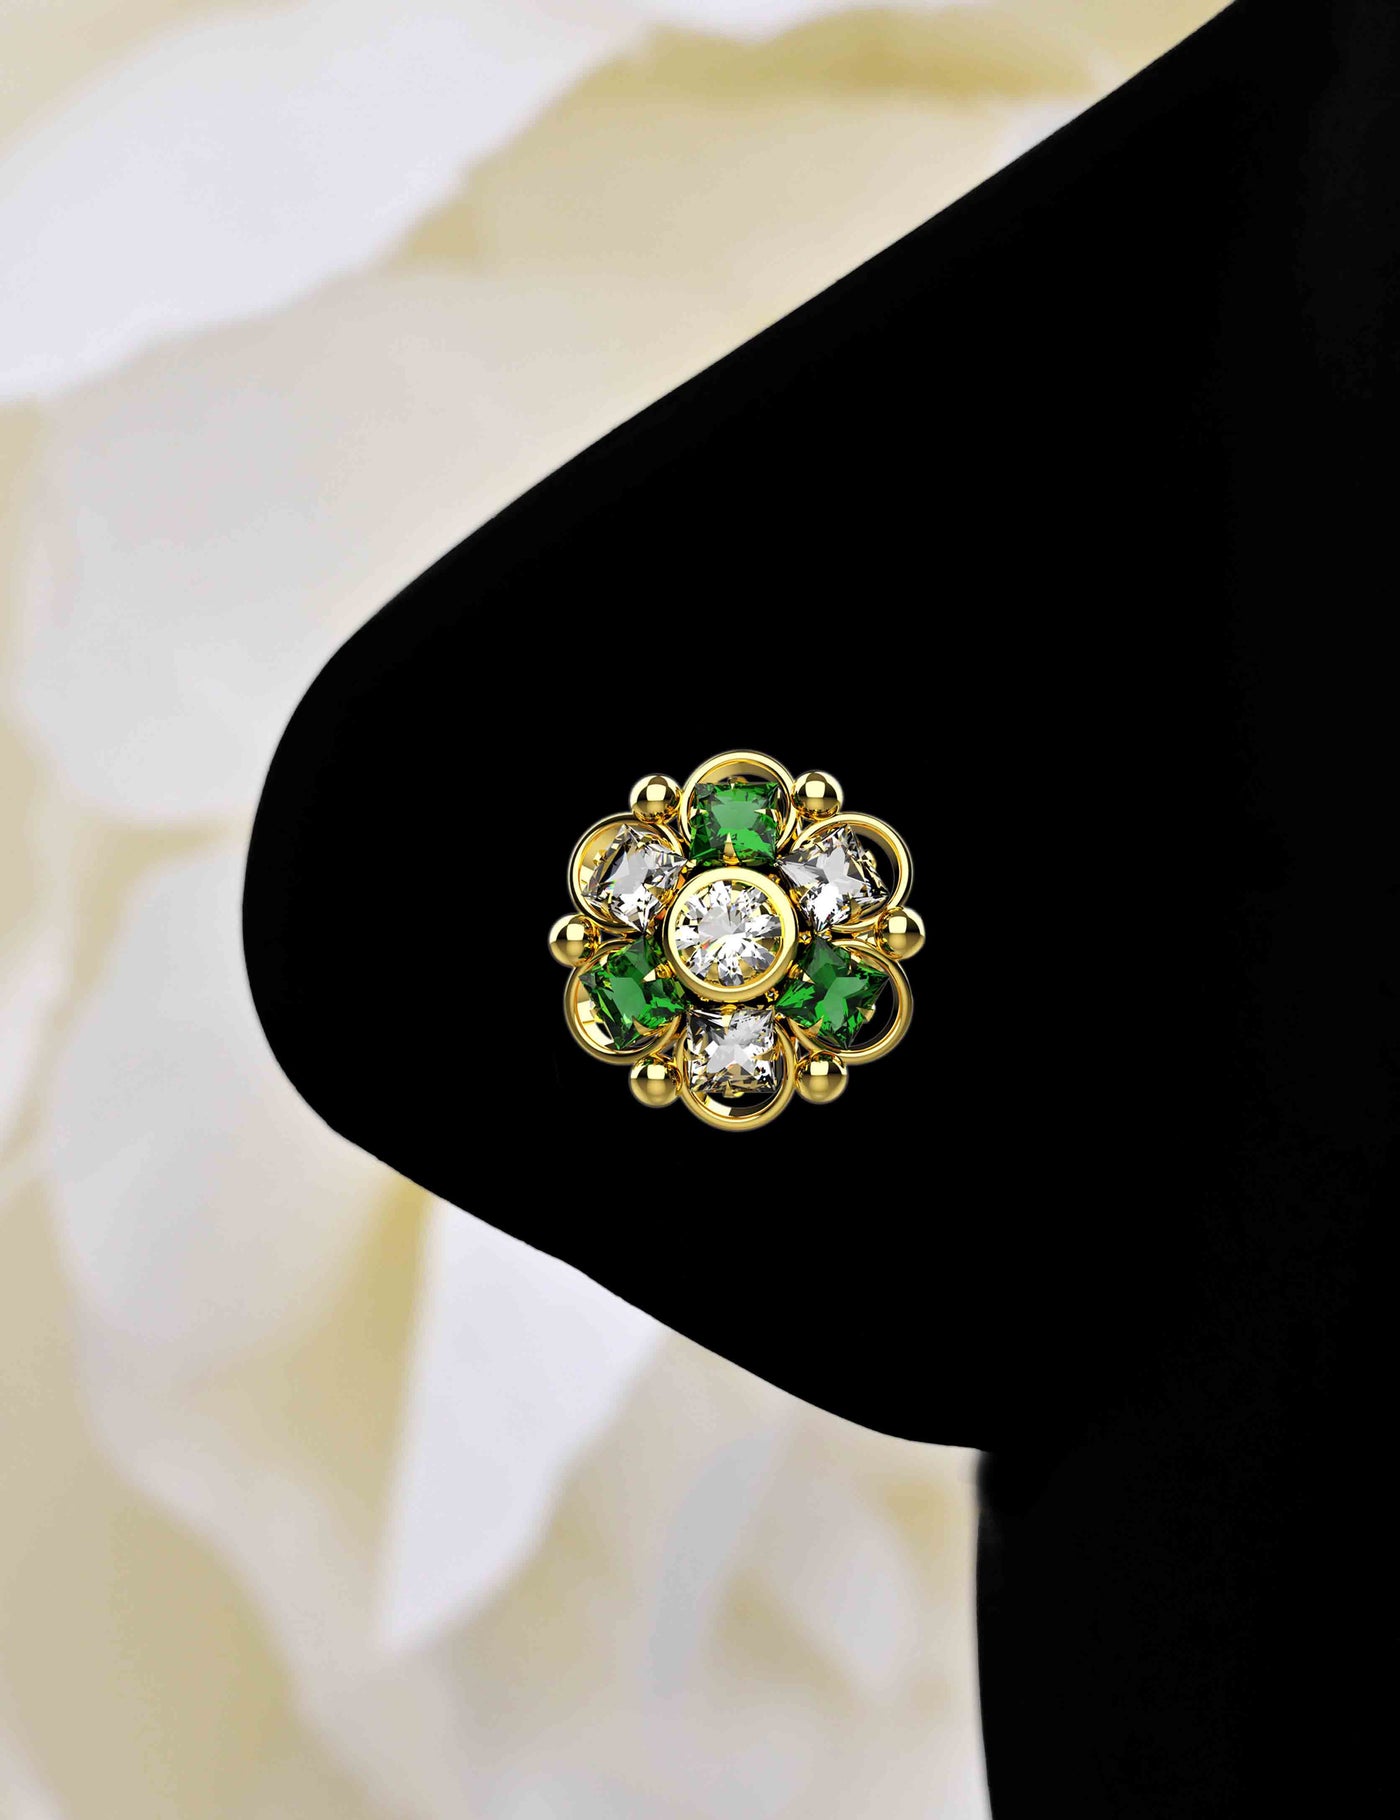 Ethnic Flower Emerald Gemstone 14k Gold Plated Nose Stud